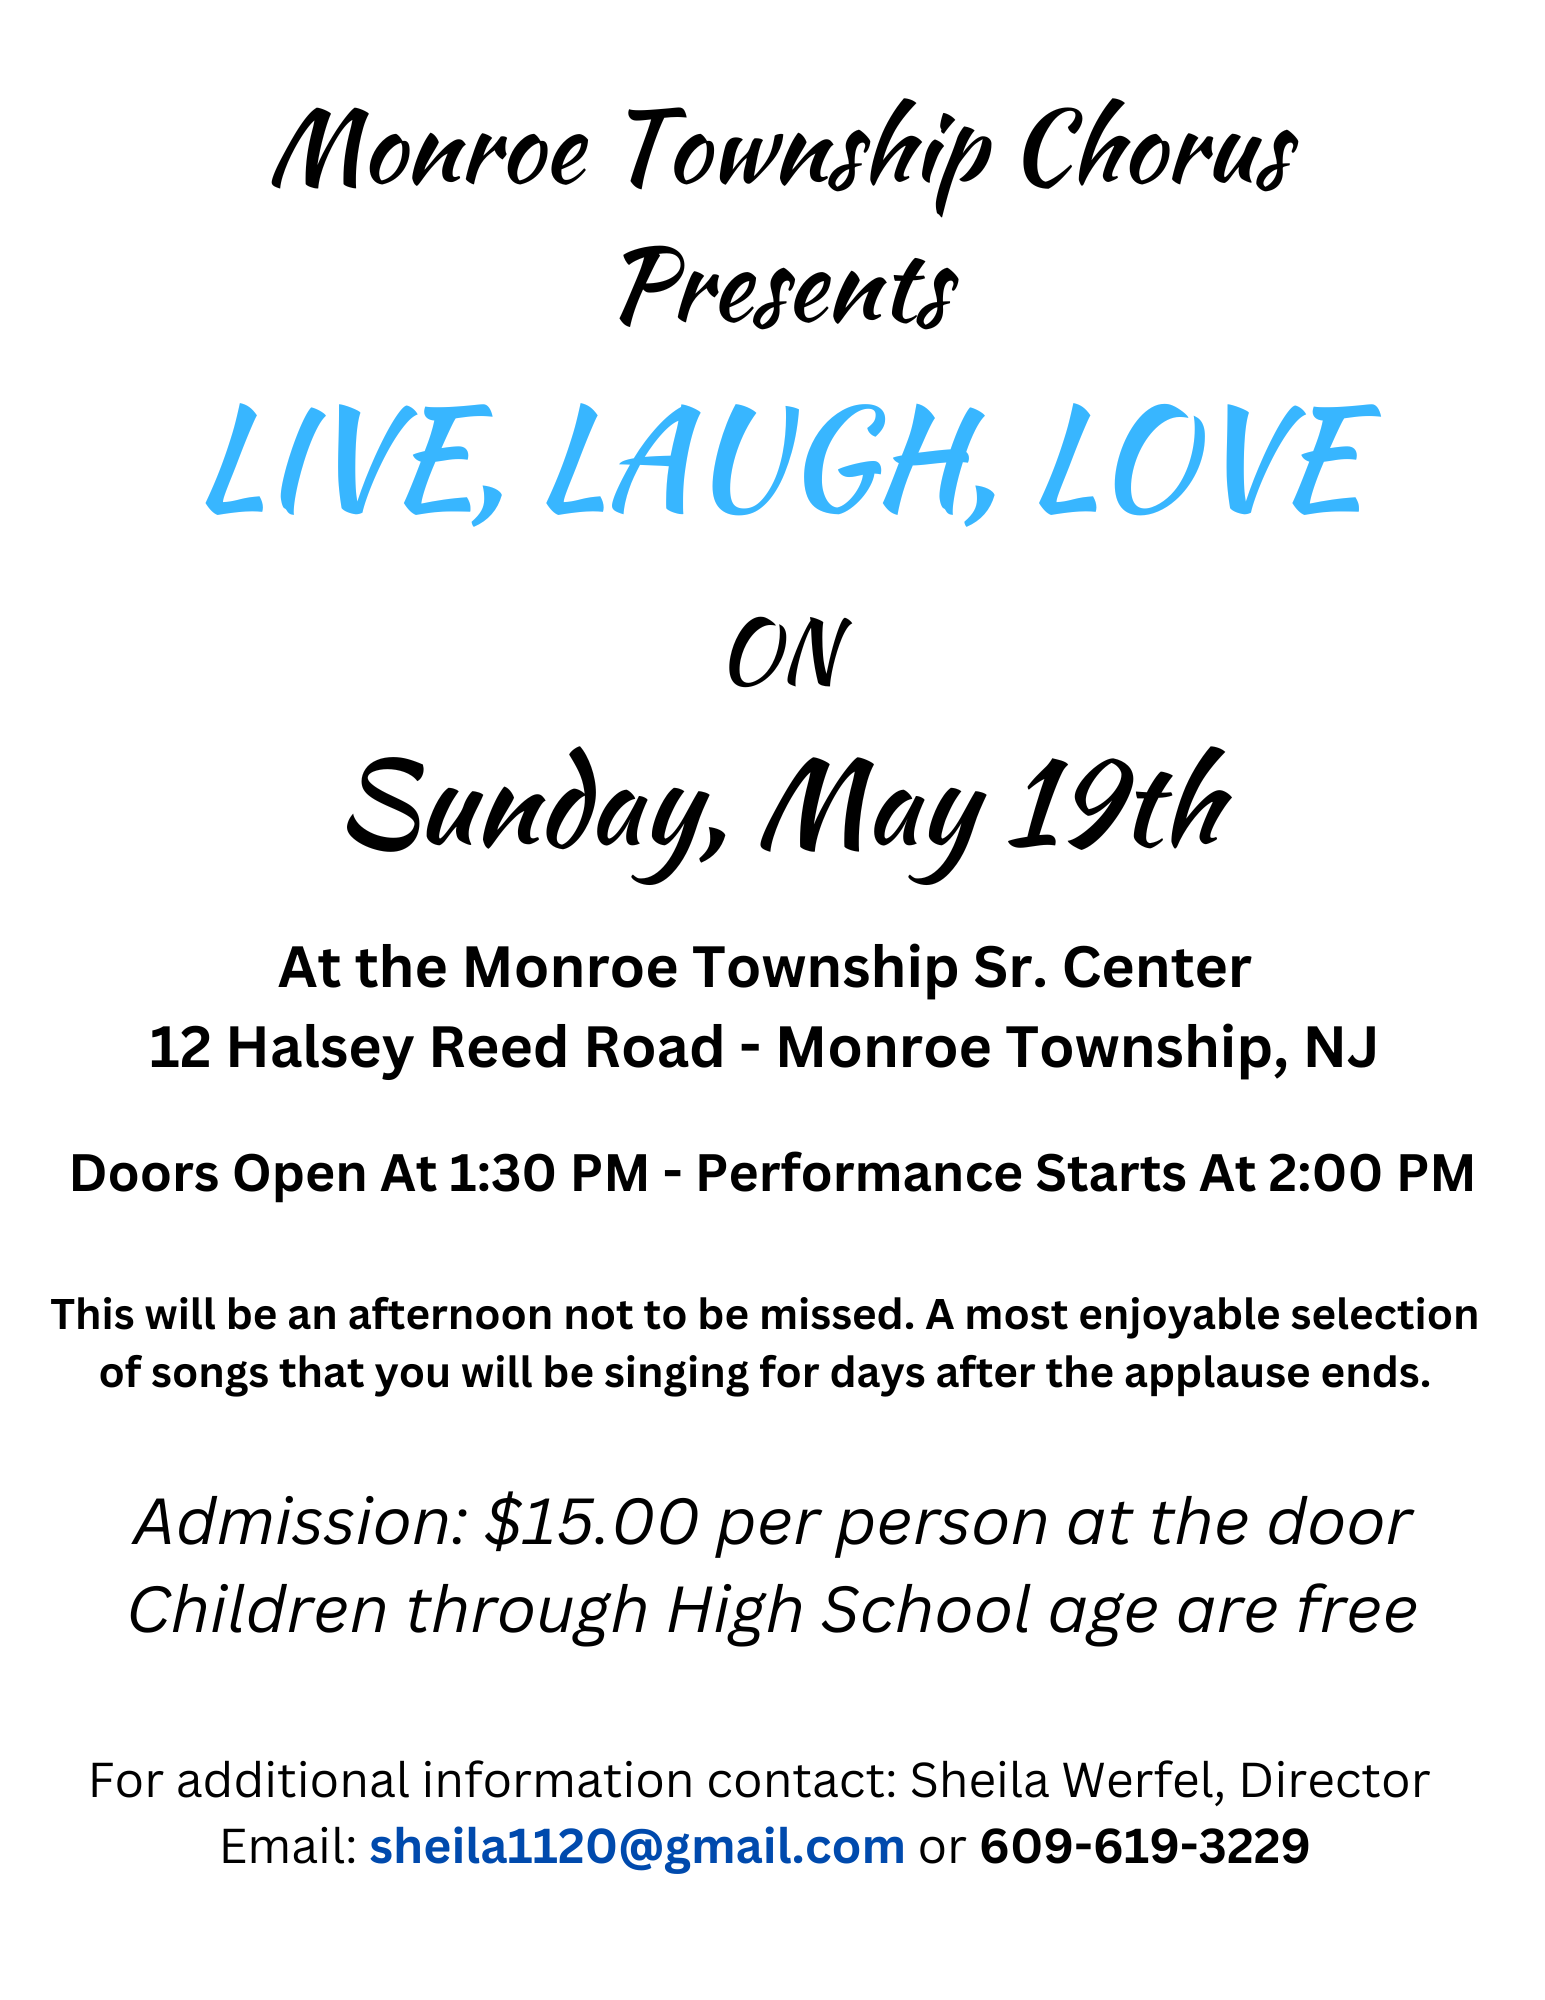 Monroe Township Chorus Live Laugh Love